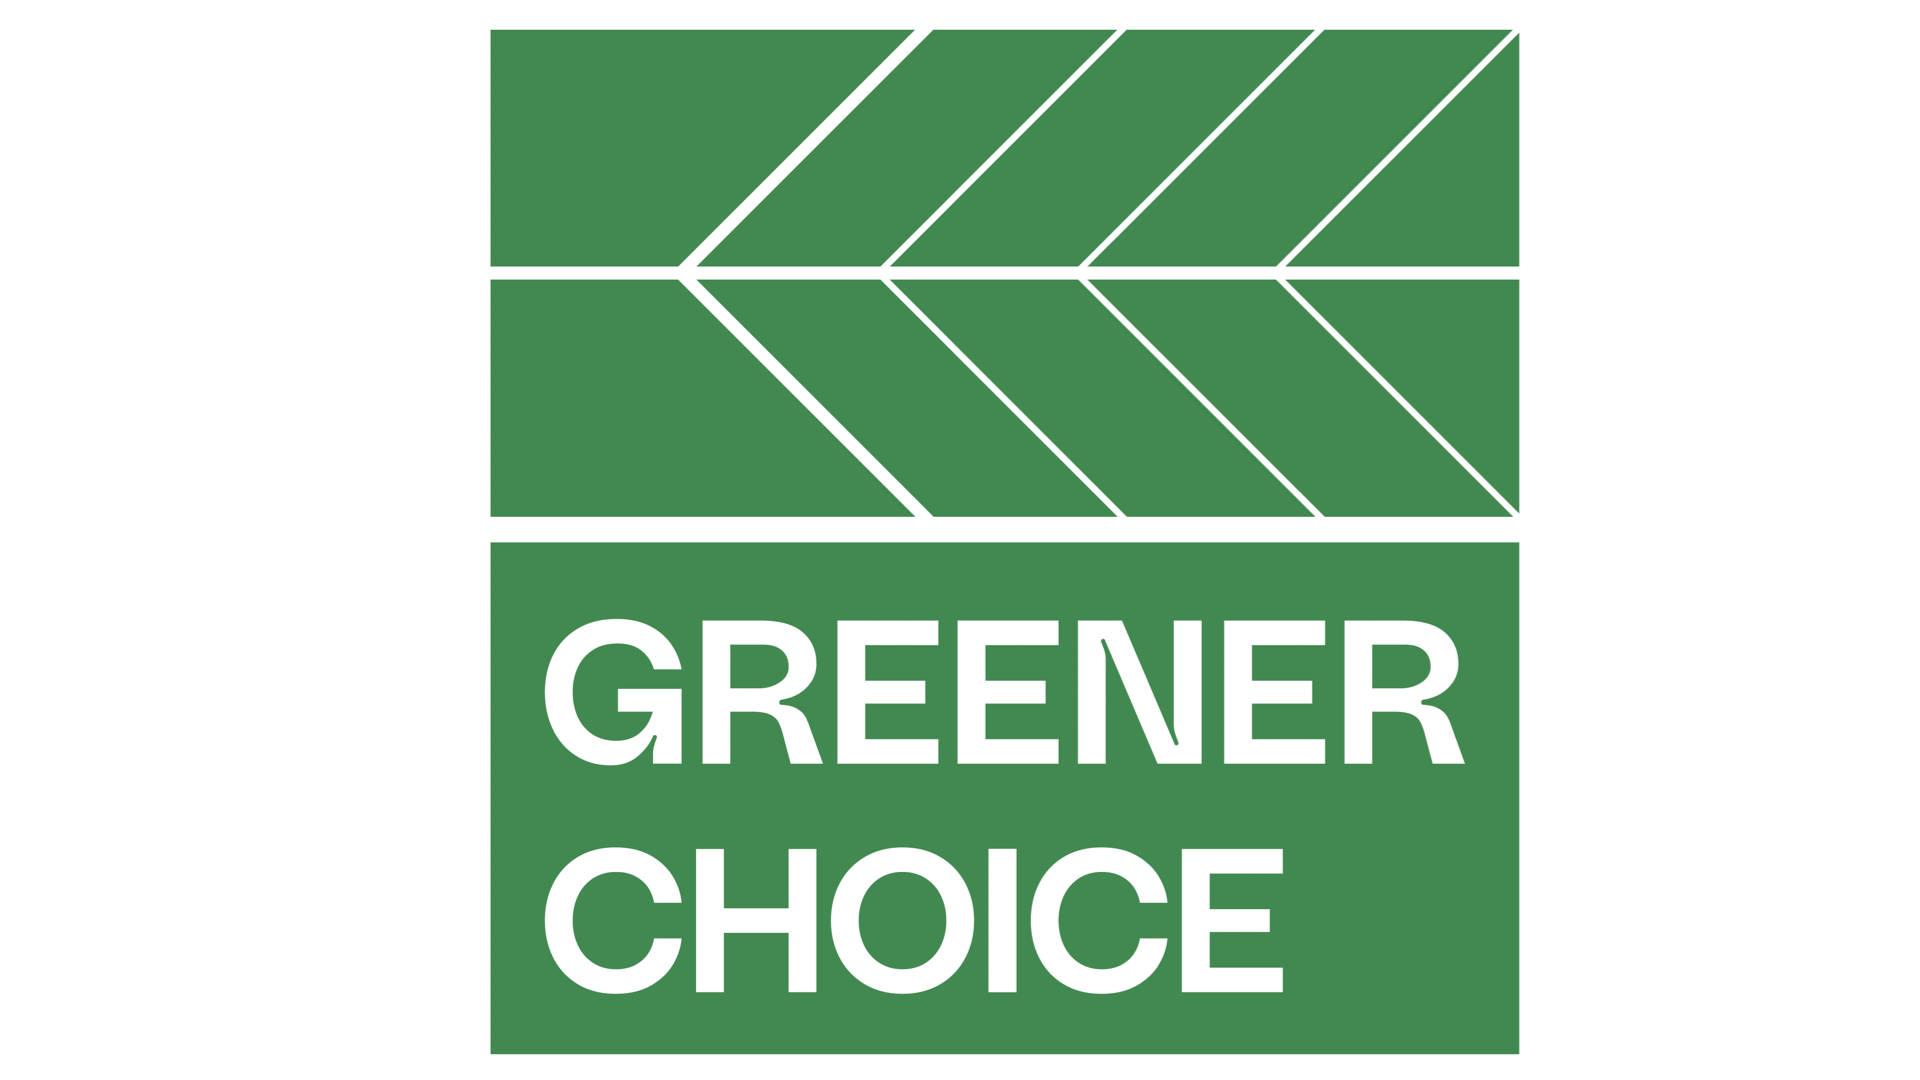 Greener choice logo